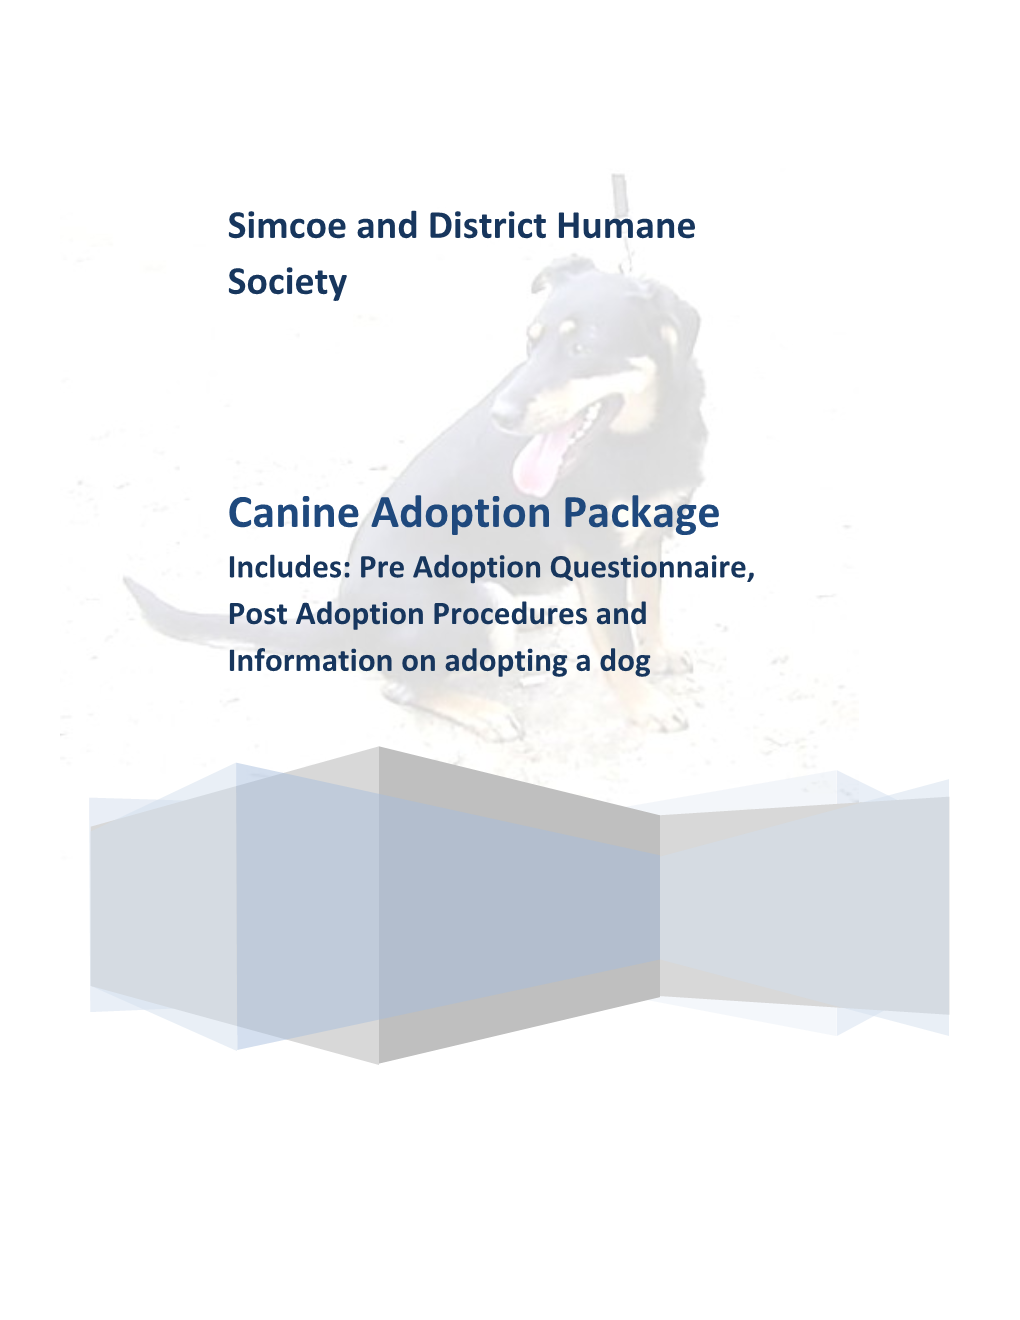 Feline Adoption Package